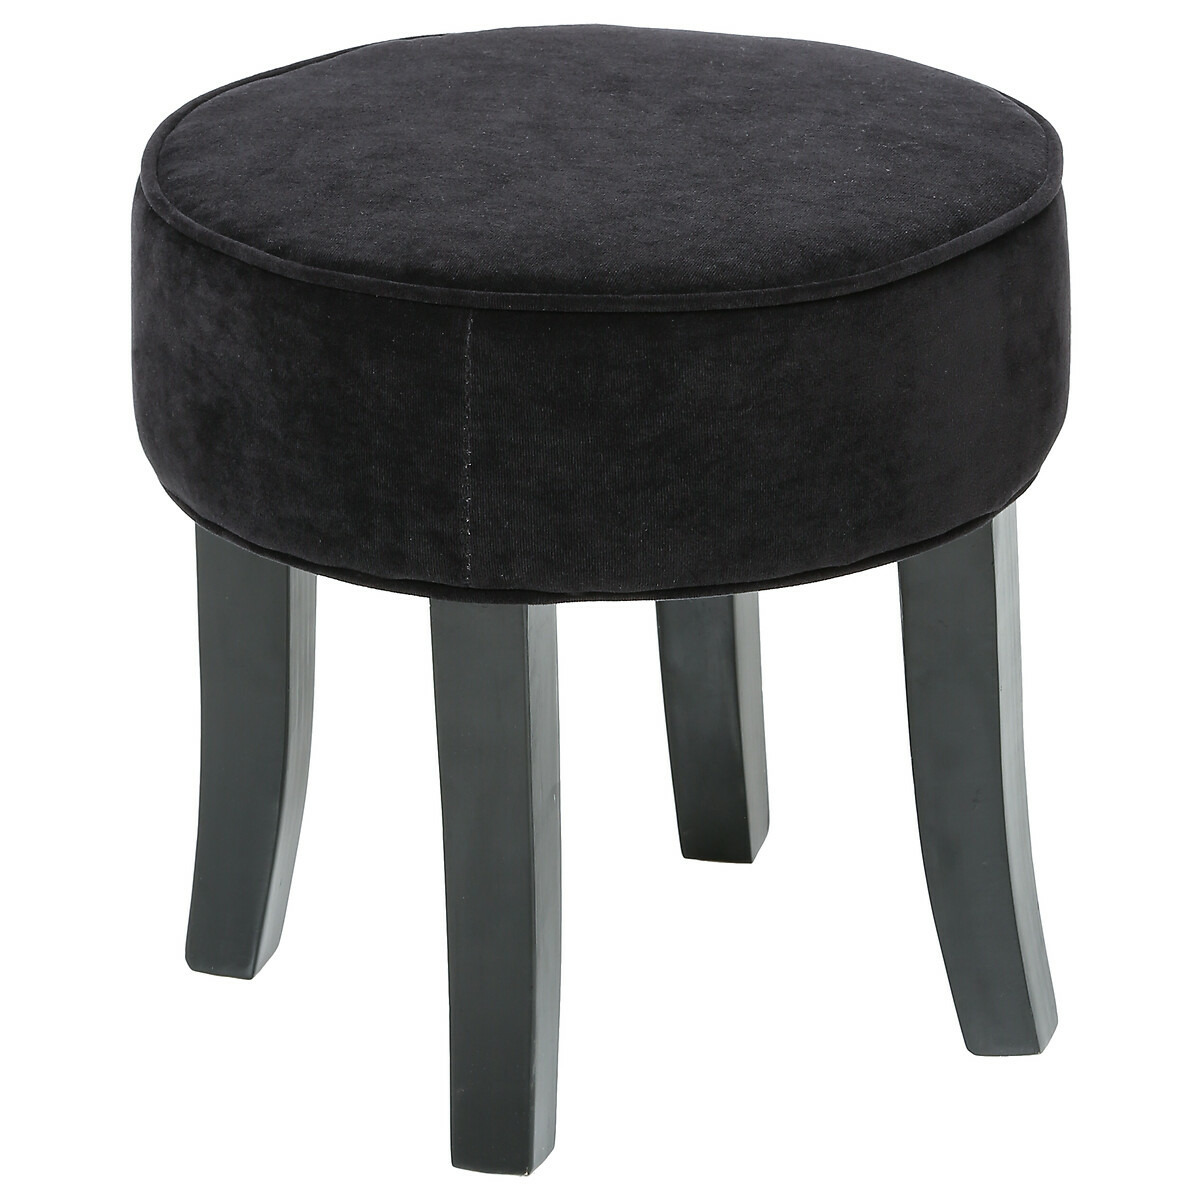 Zit krukje-bijzet stoel hout-stof zwart fluweel D35 x H40 cm